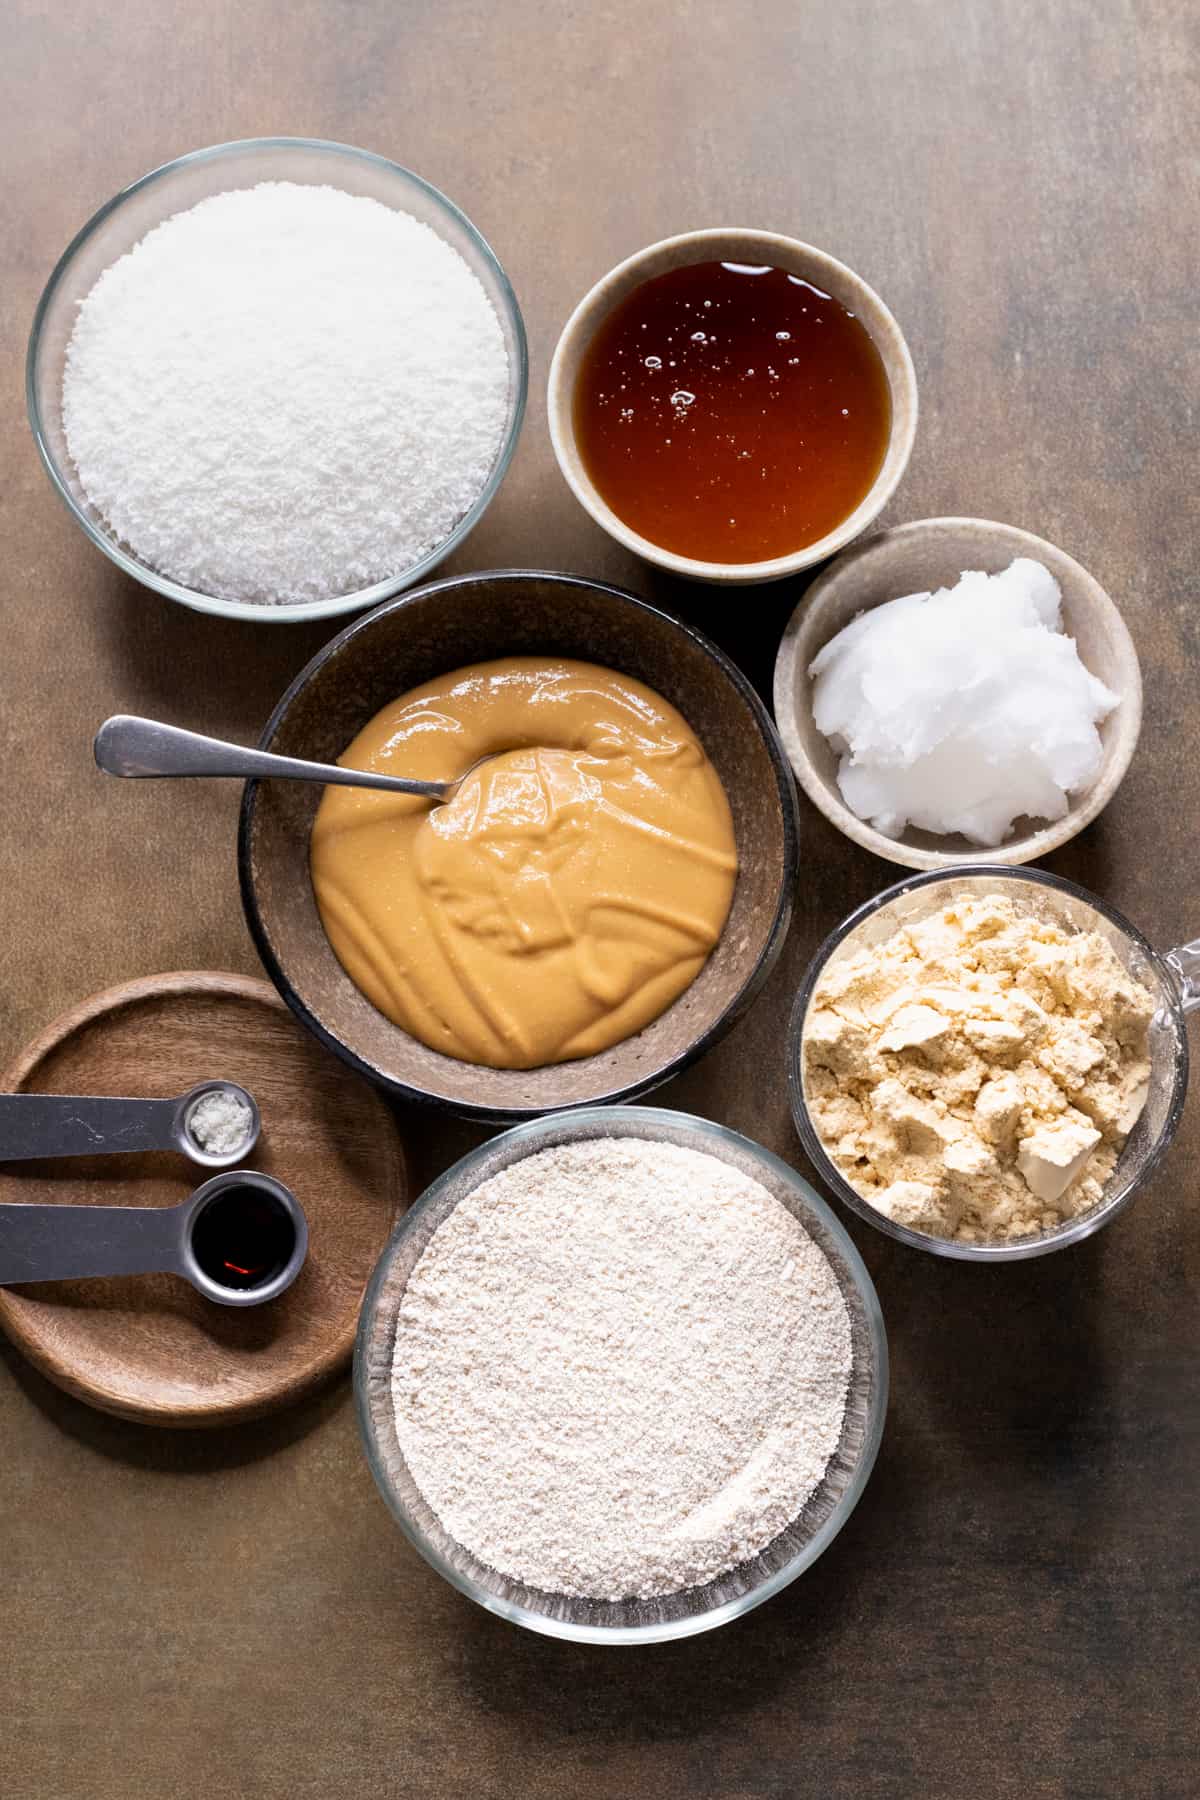 Ingredients for vegan peanut butter oat protein bars